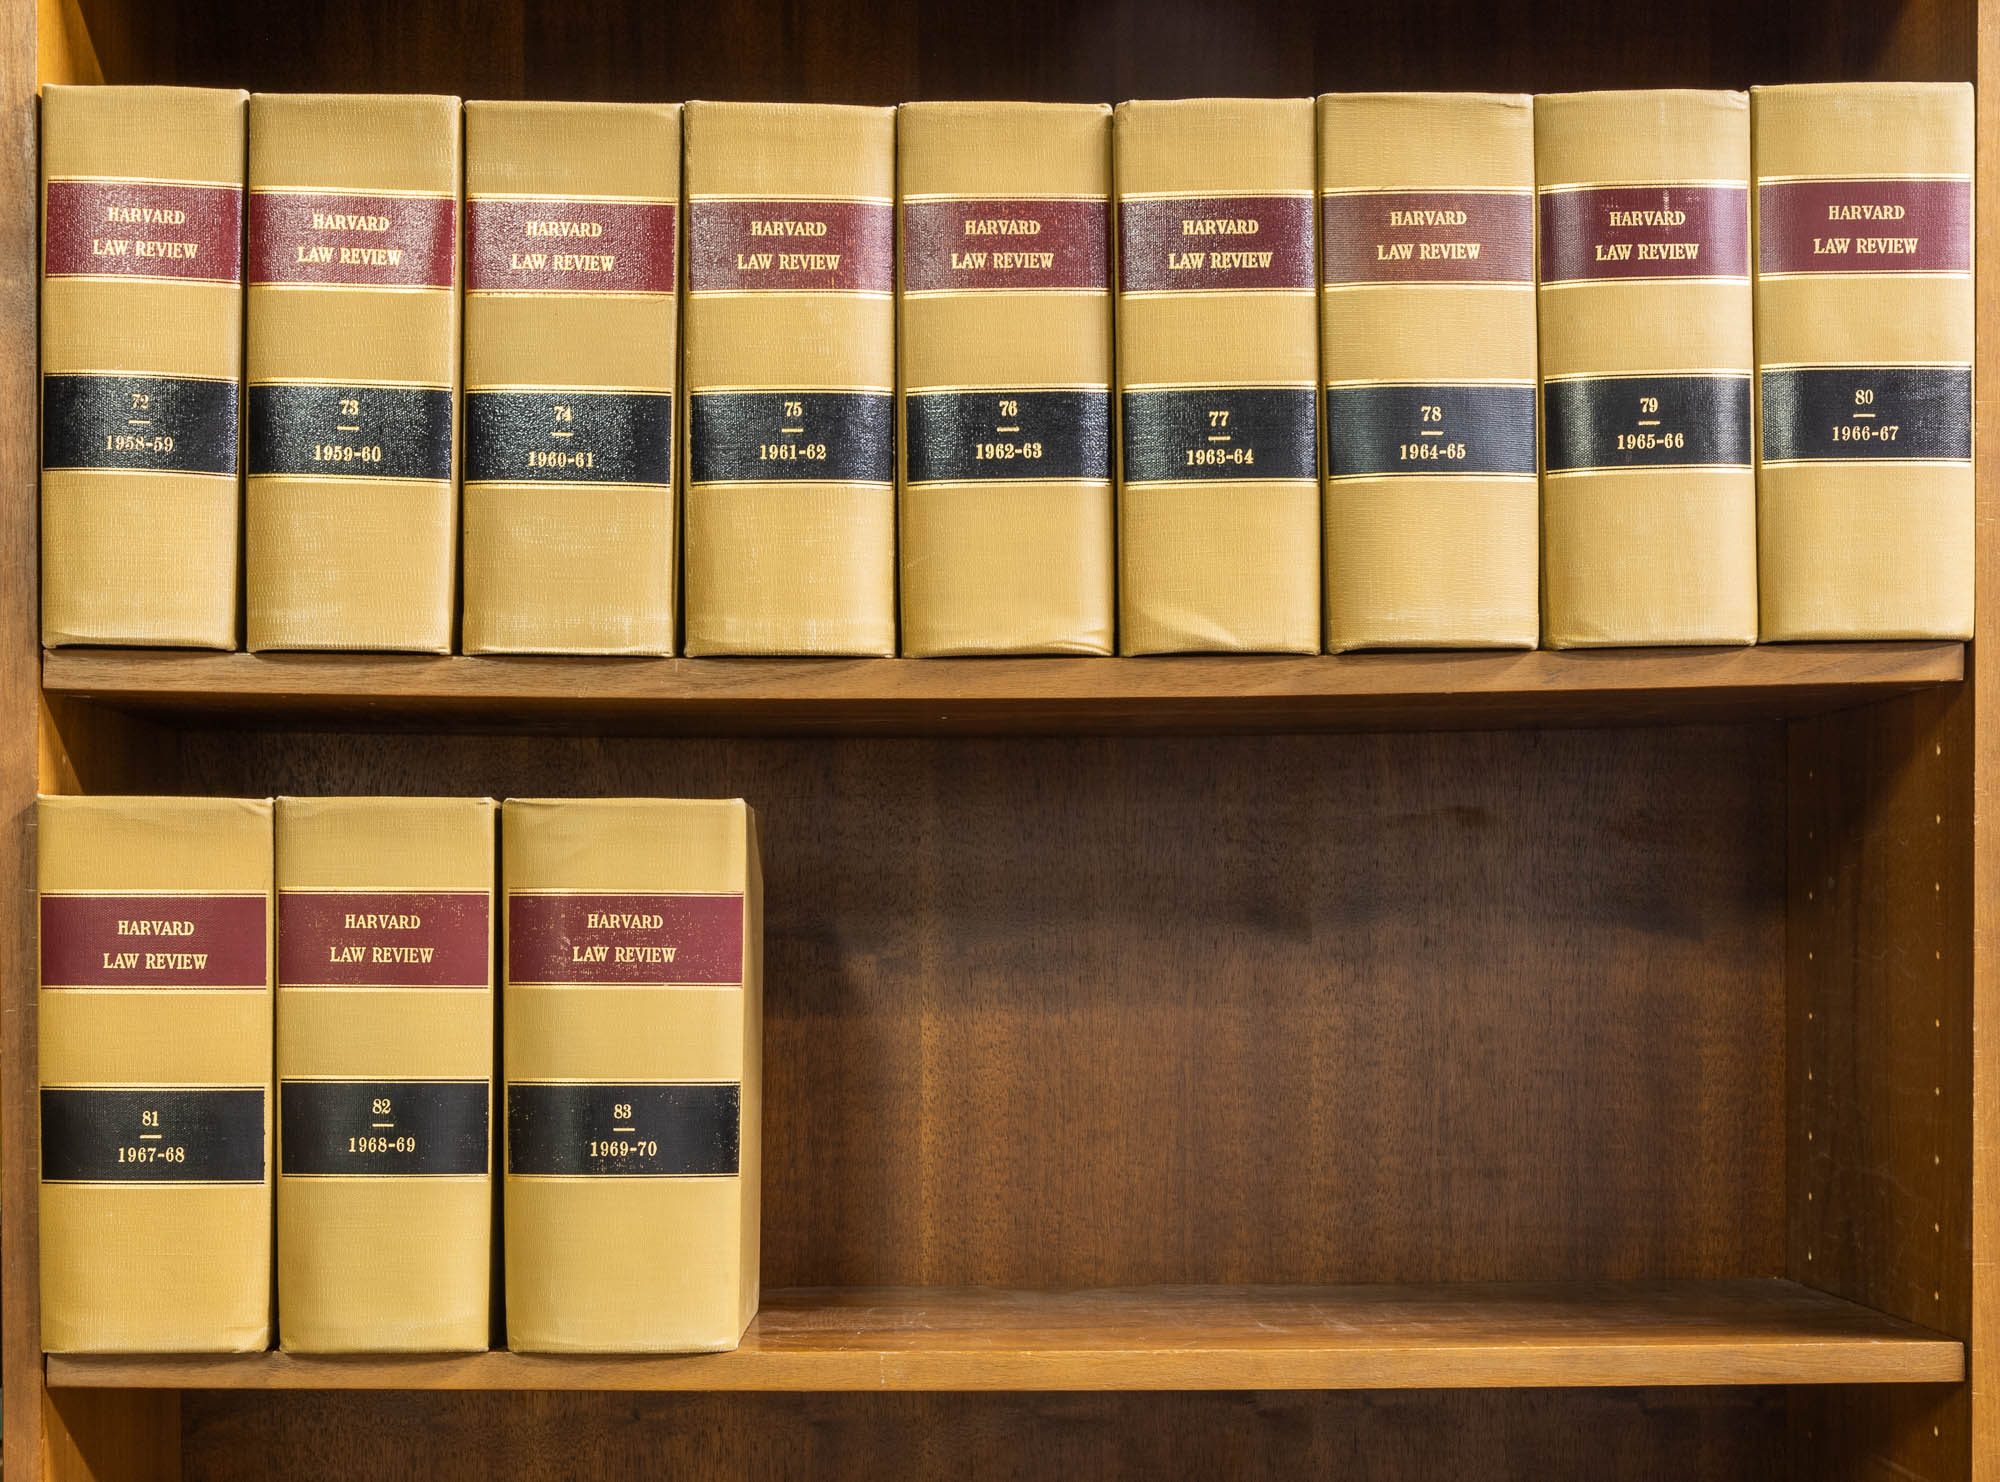 law school books